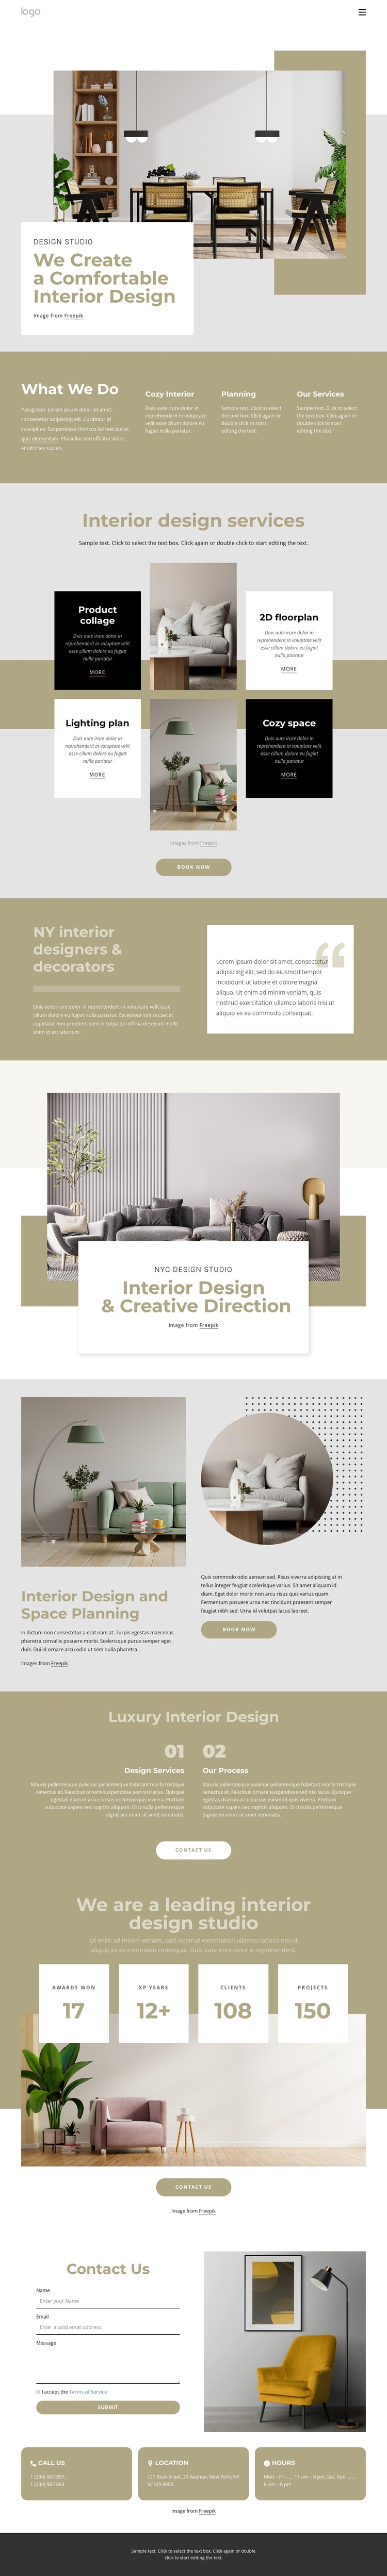 We create a comfortable interiors Web Design